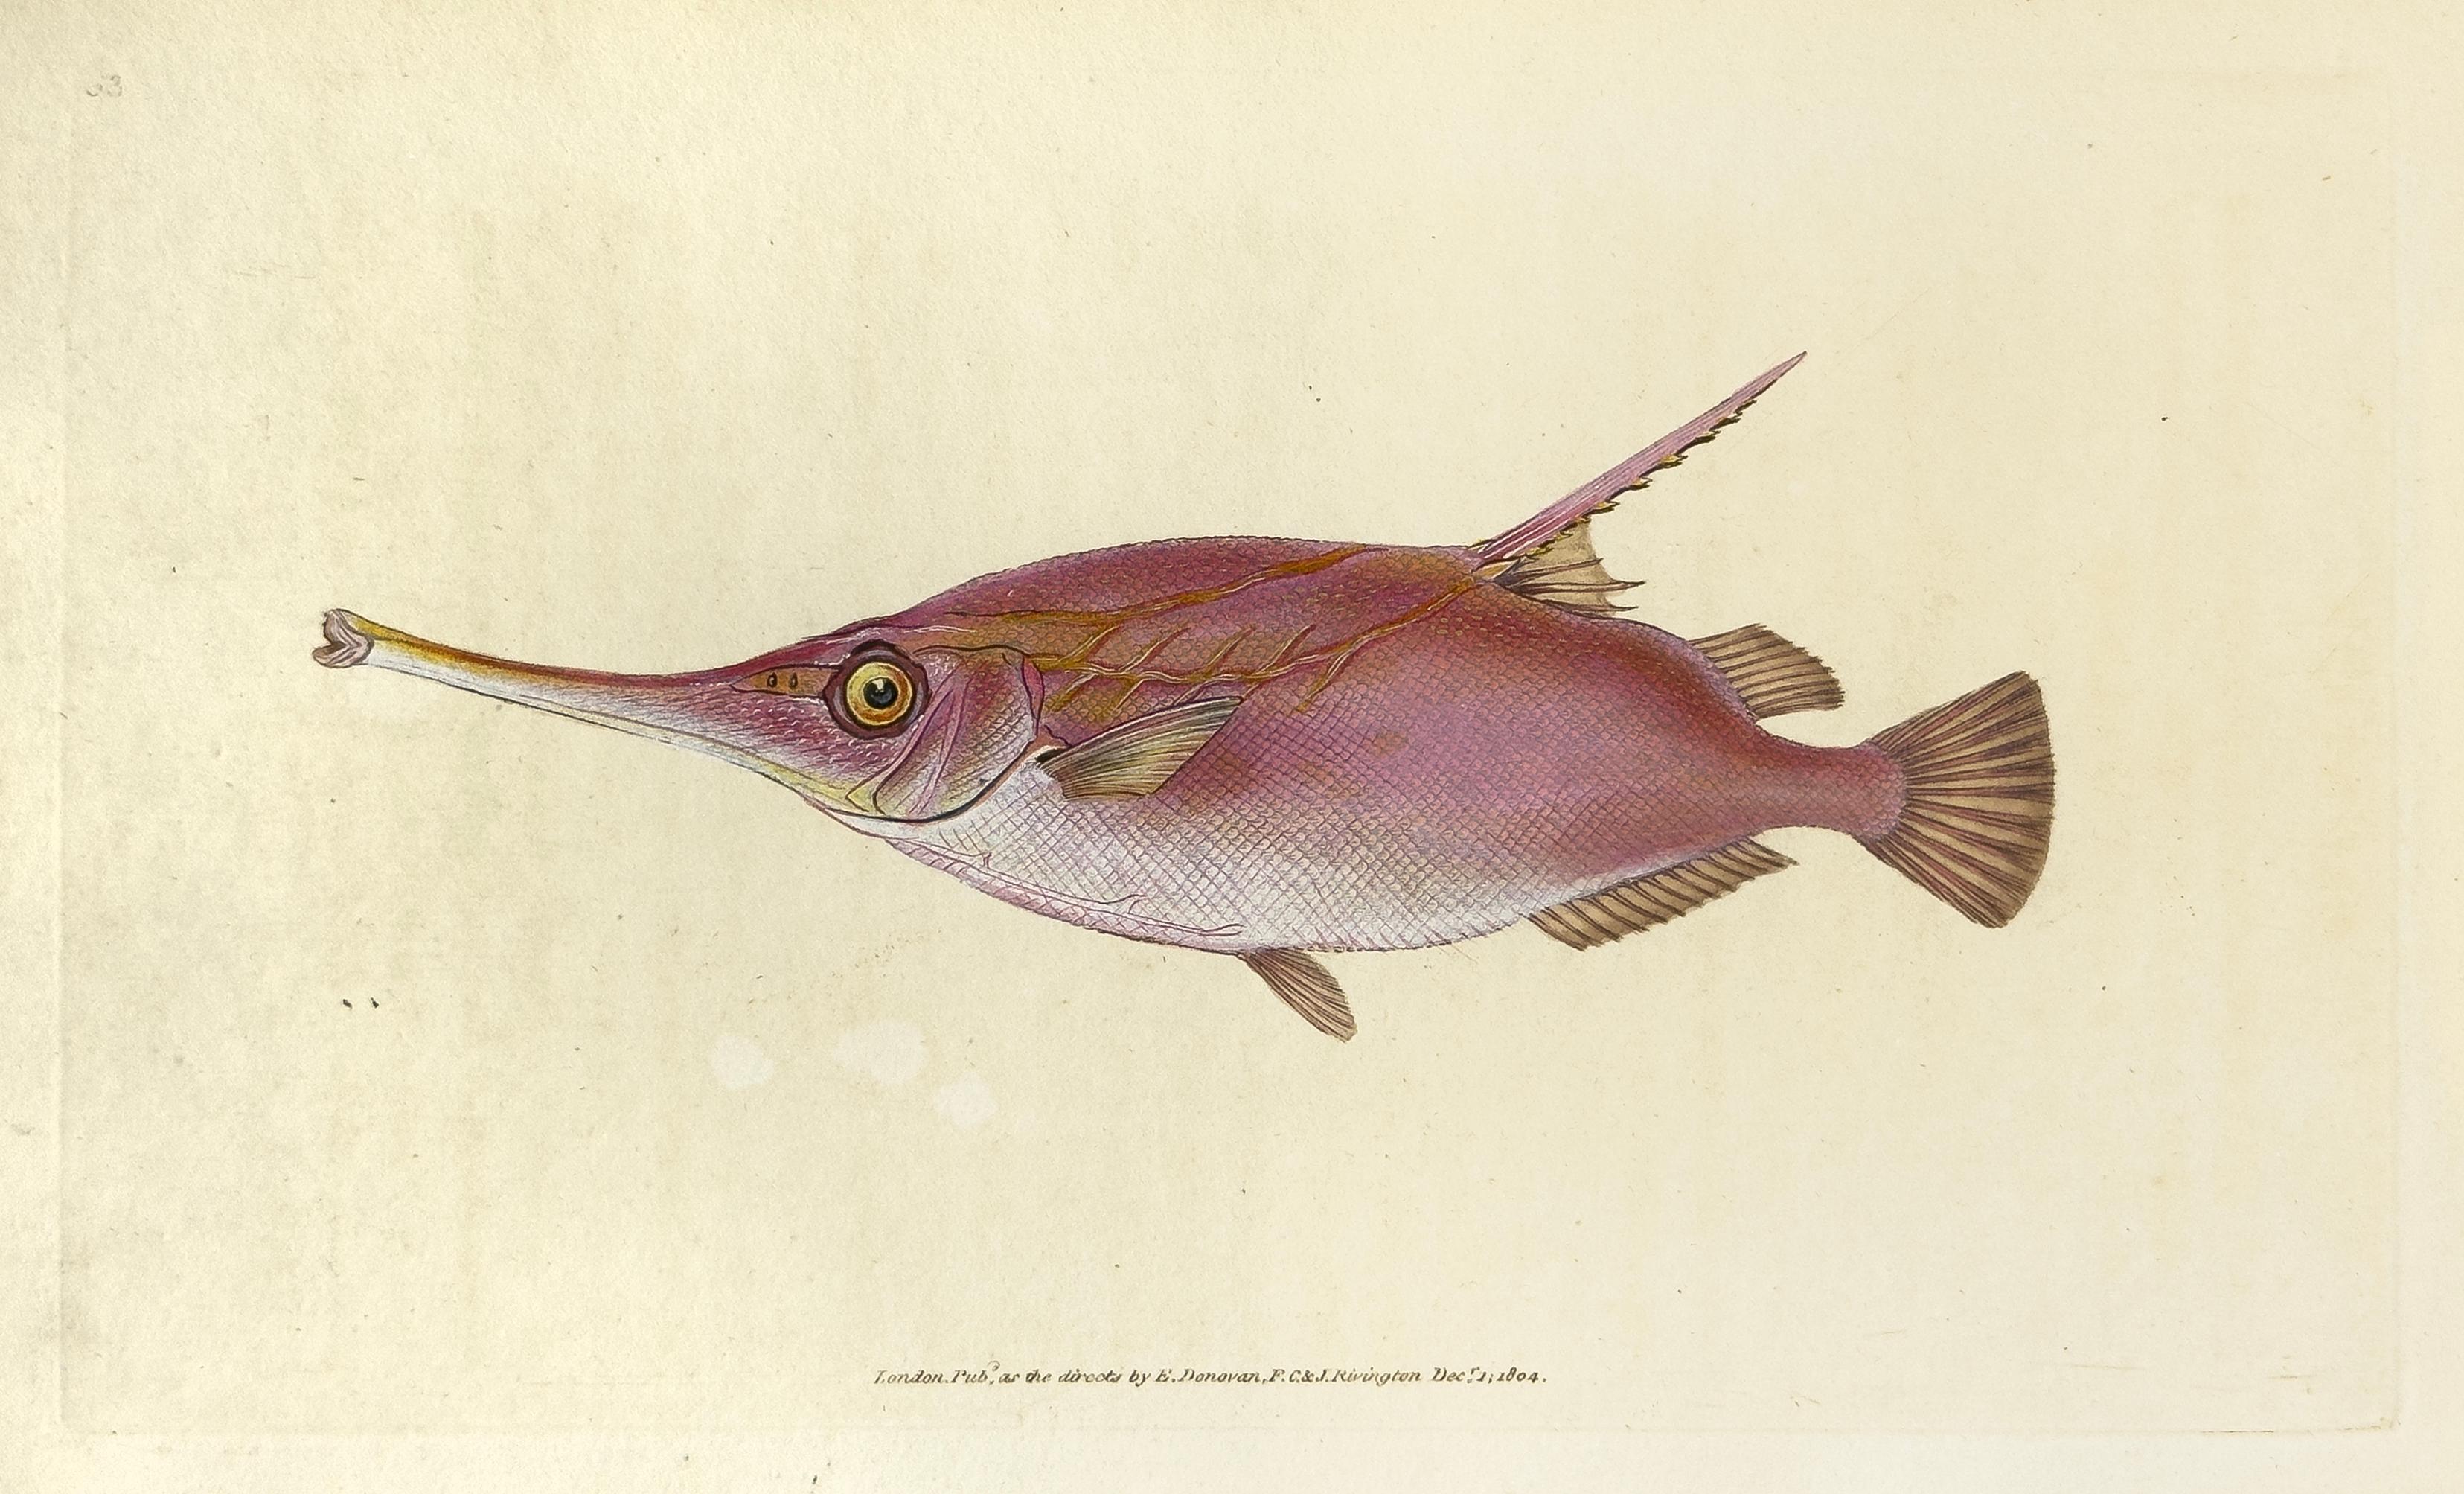 Edward Donovan Animal Print - 63: Centriscus scolopax, Snipe or Trumpet Fish